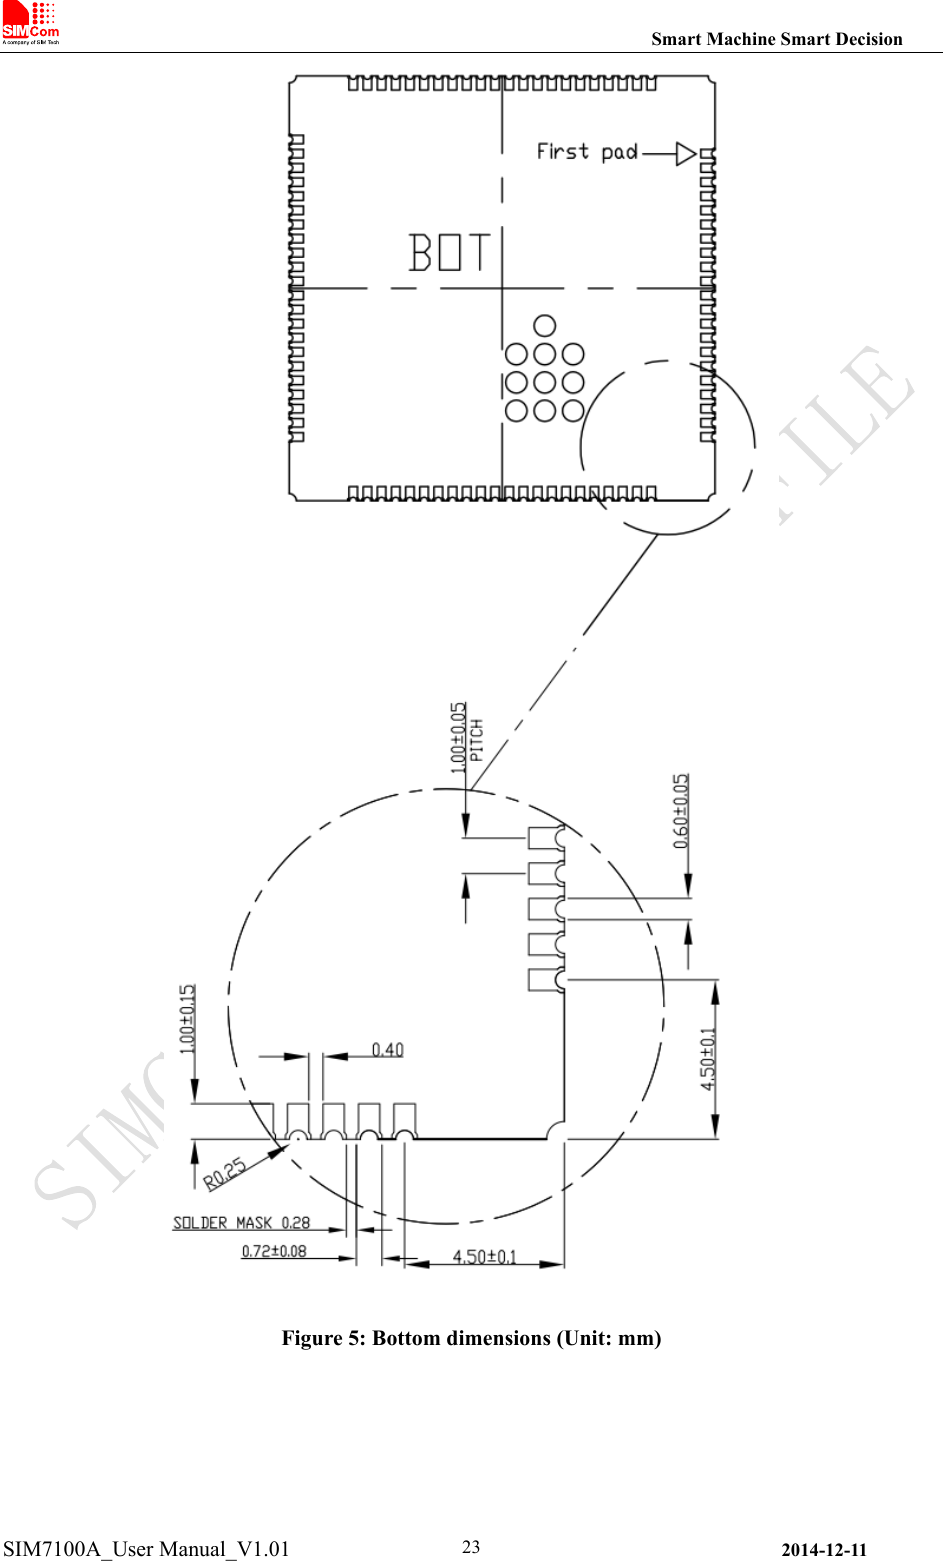                                                                Smart Machine Smart Decision SIM7100A_User Manual_V1.01                2014-12-11 23 Figure 5: Bottom dimensions (Unit: mm)   